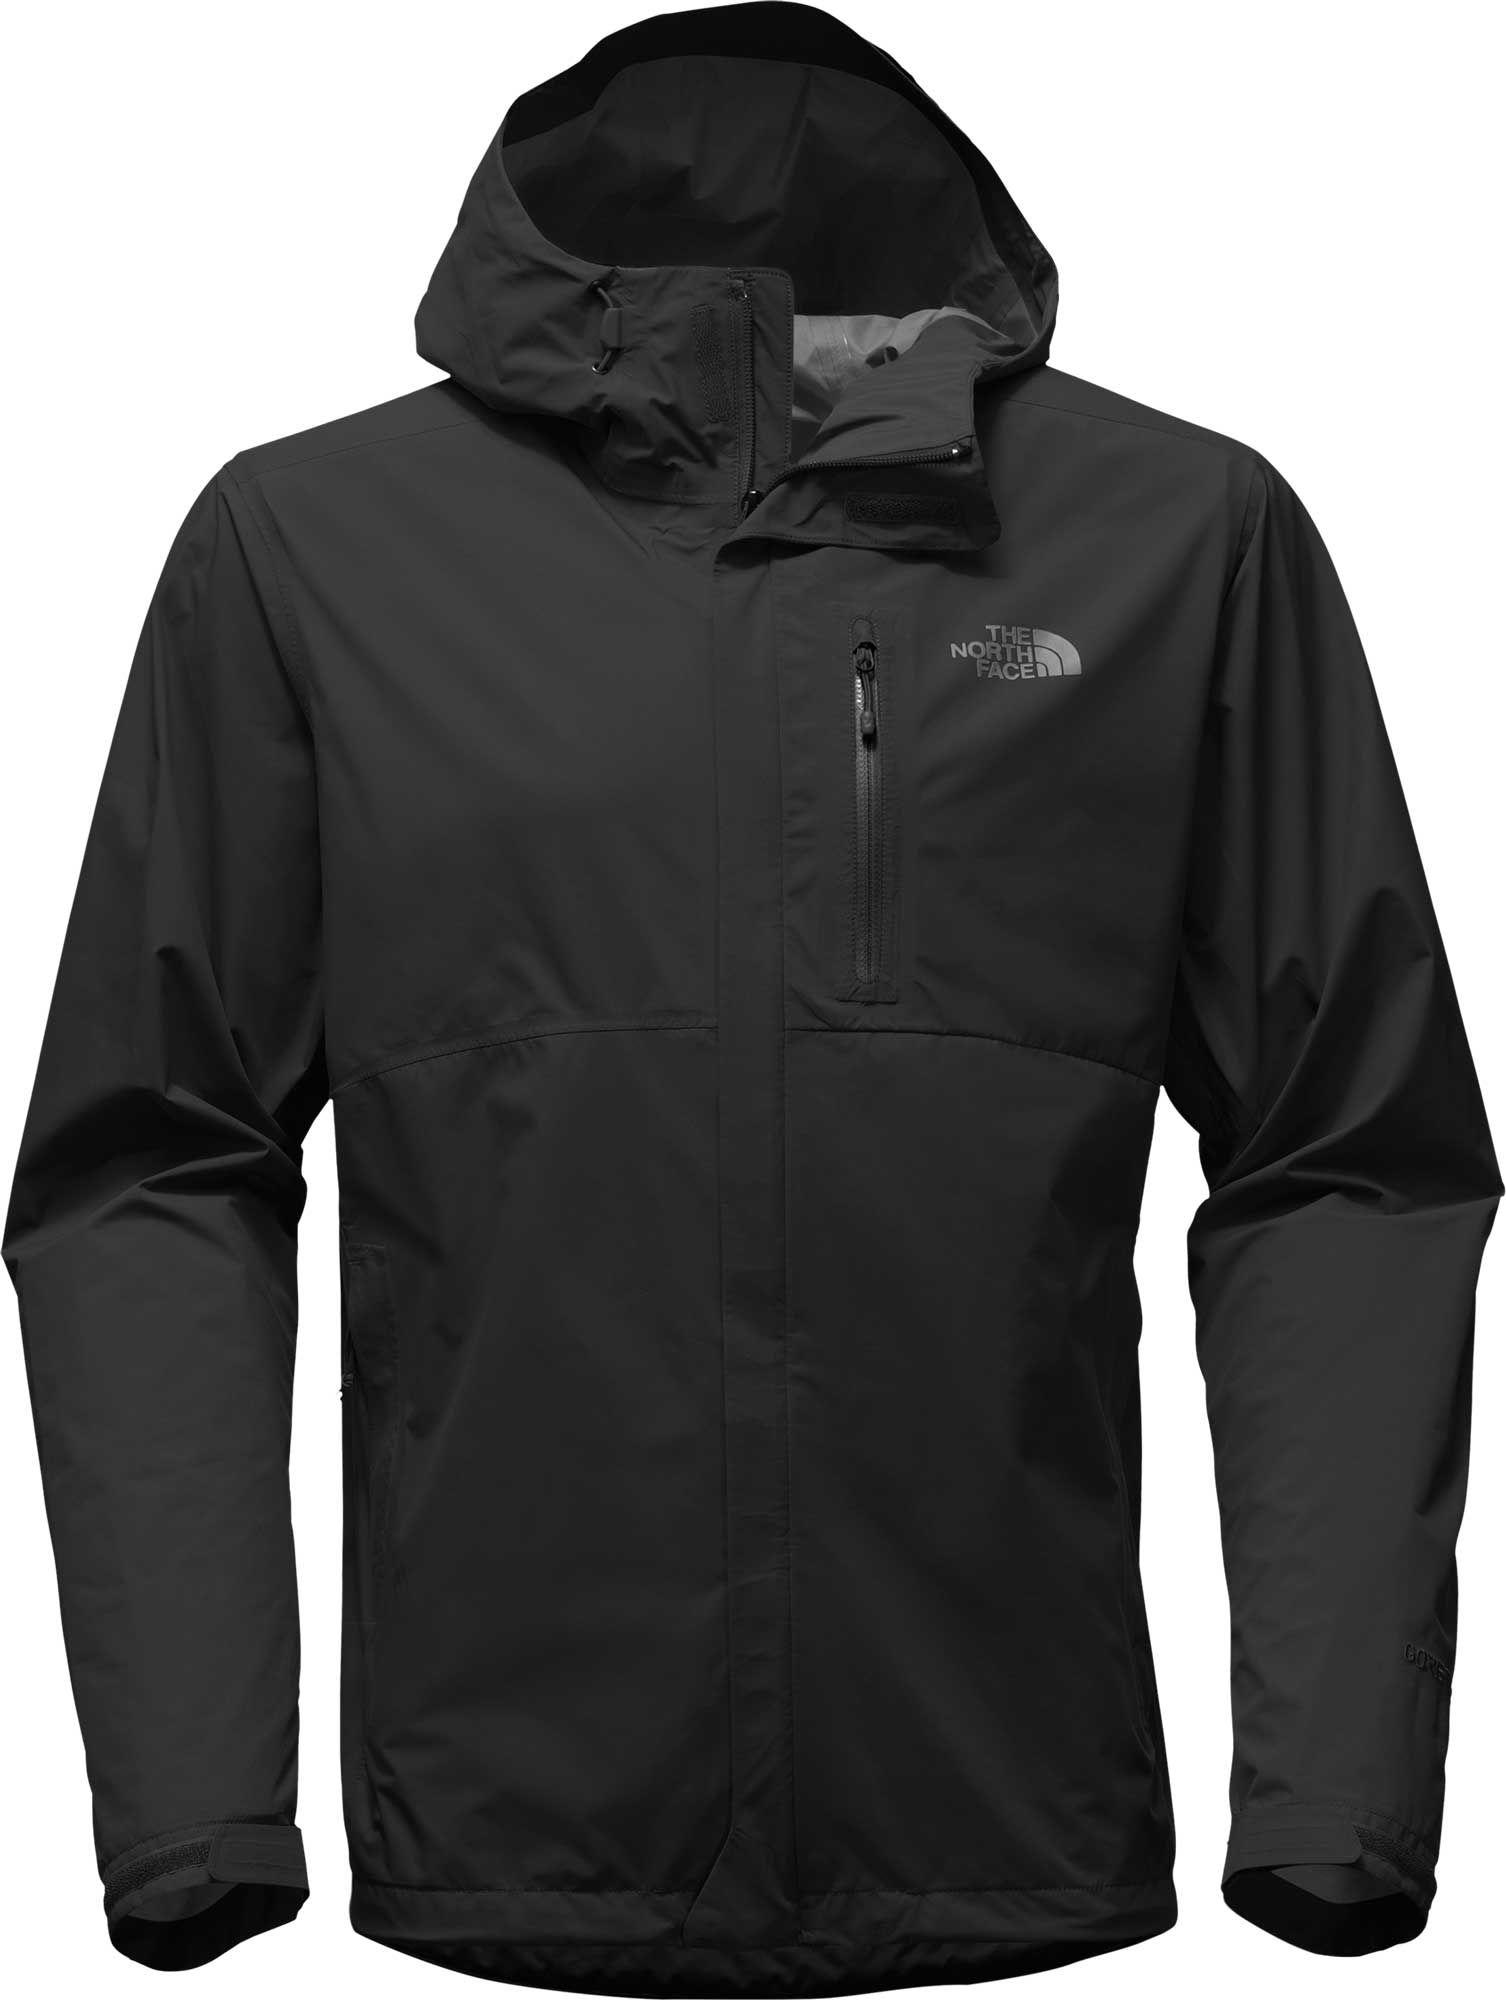 north face dryzzle jacket sale